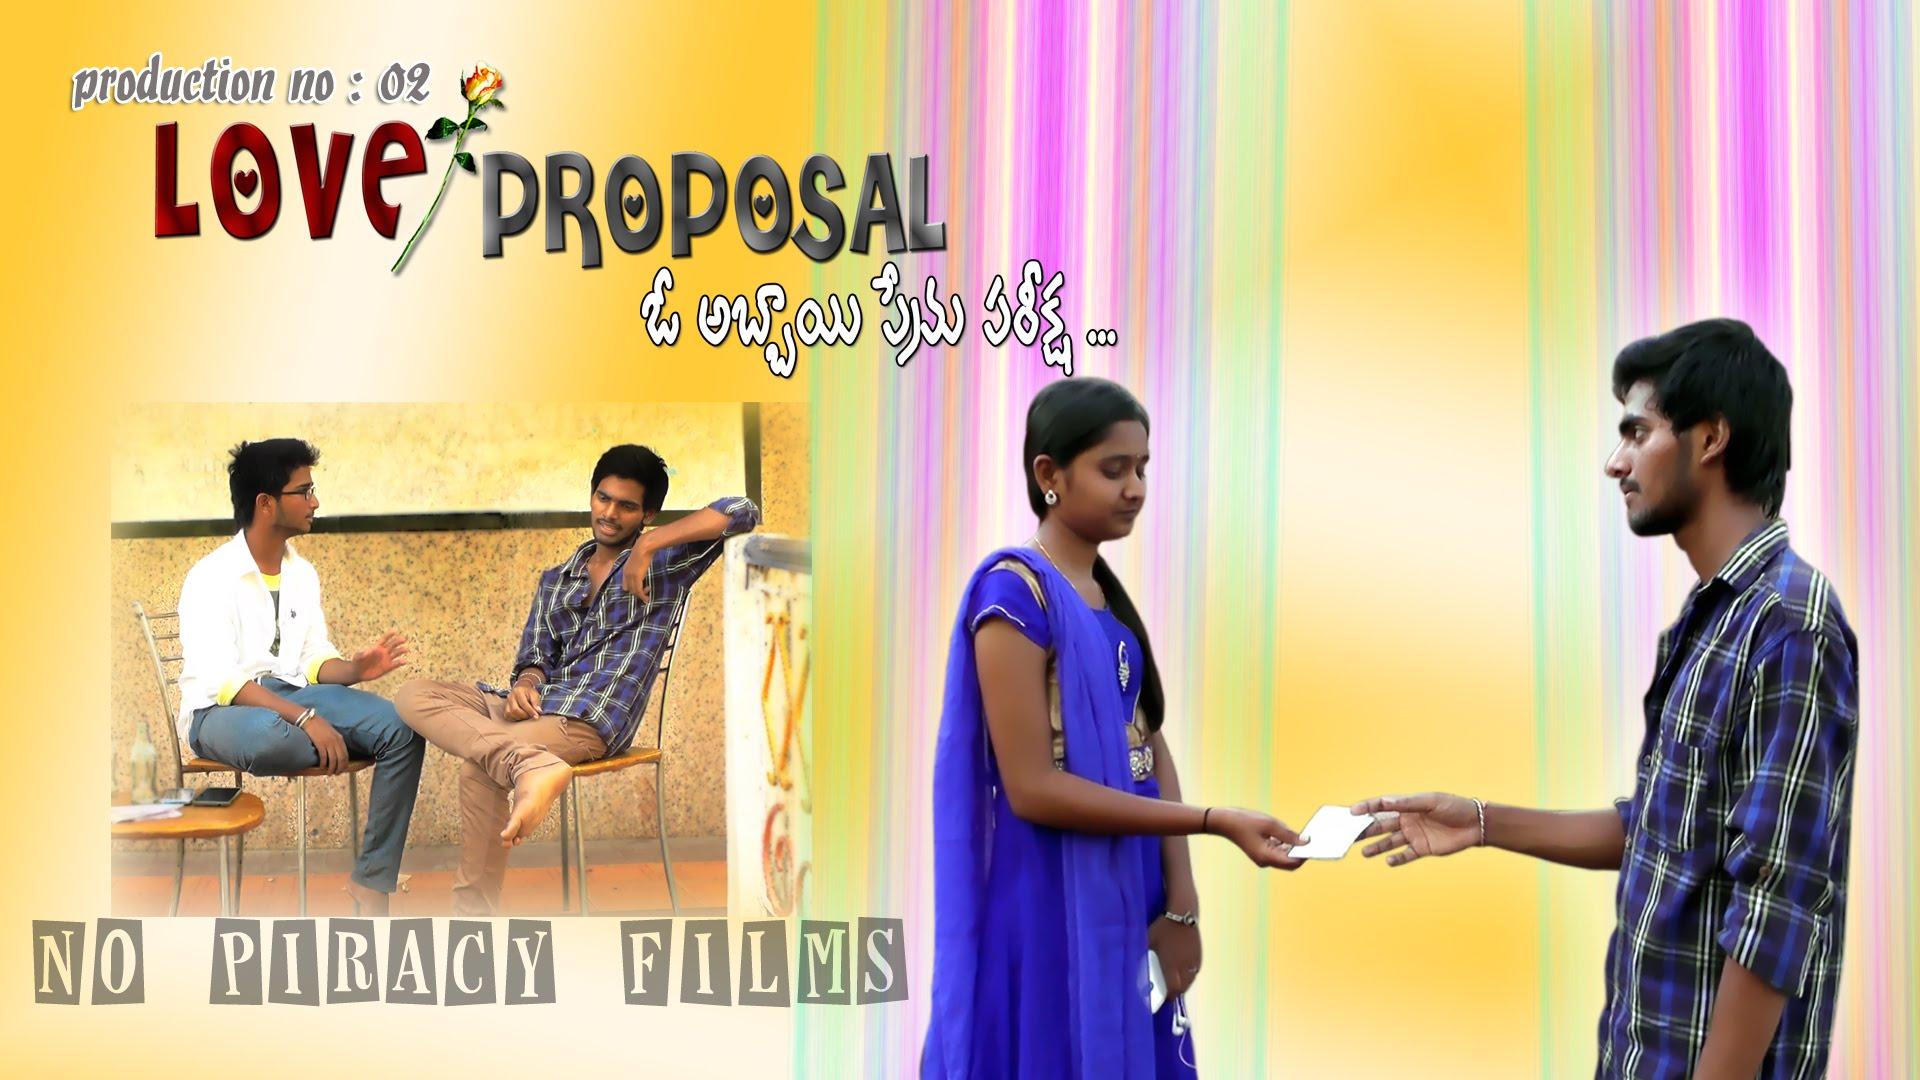 Love Propose Wallpaper HD Proposal Image HD Telugu, HD